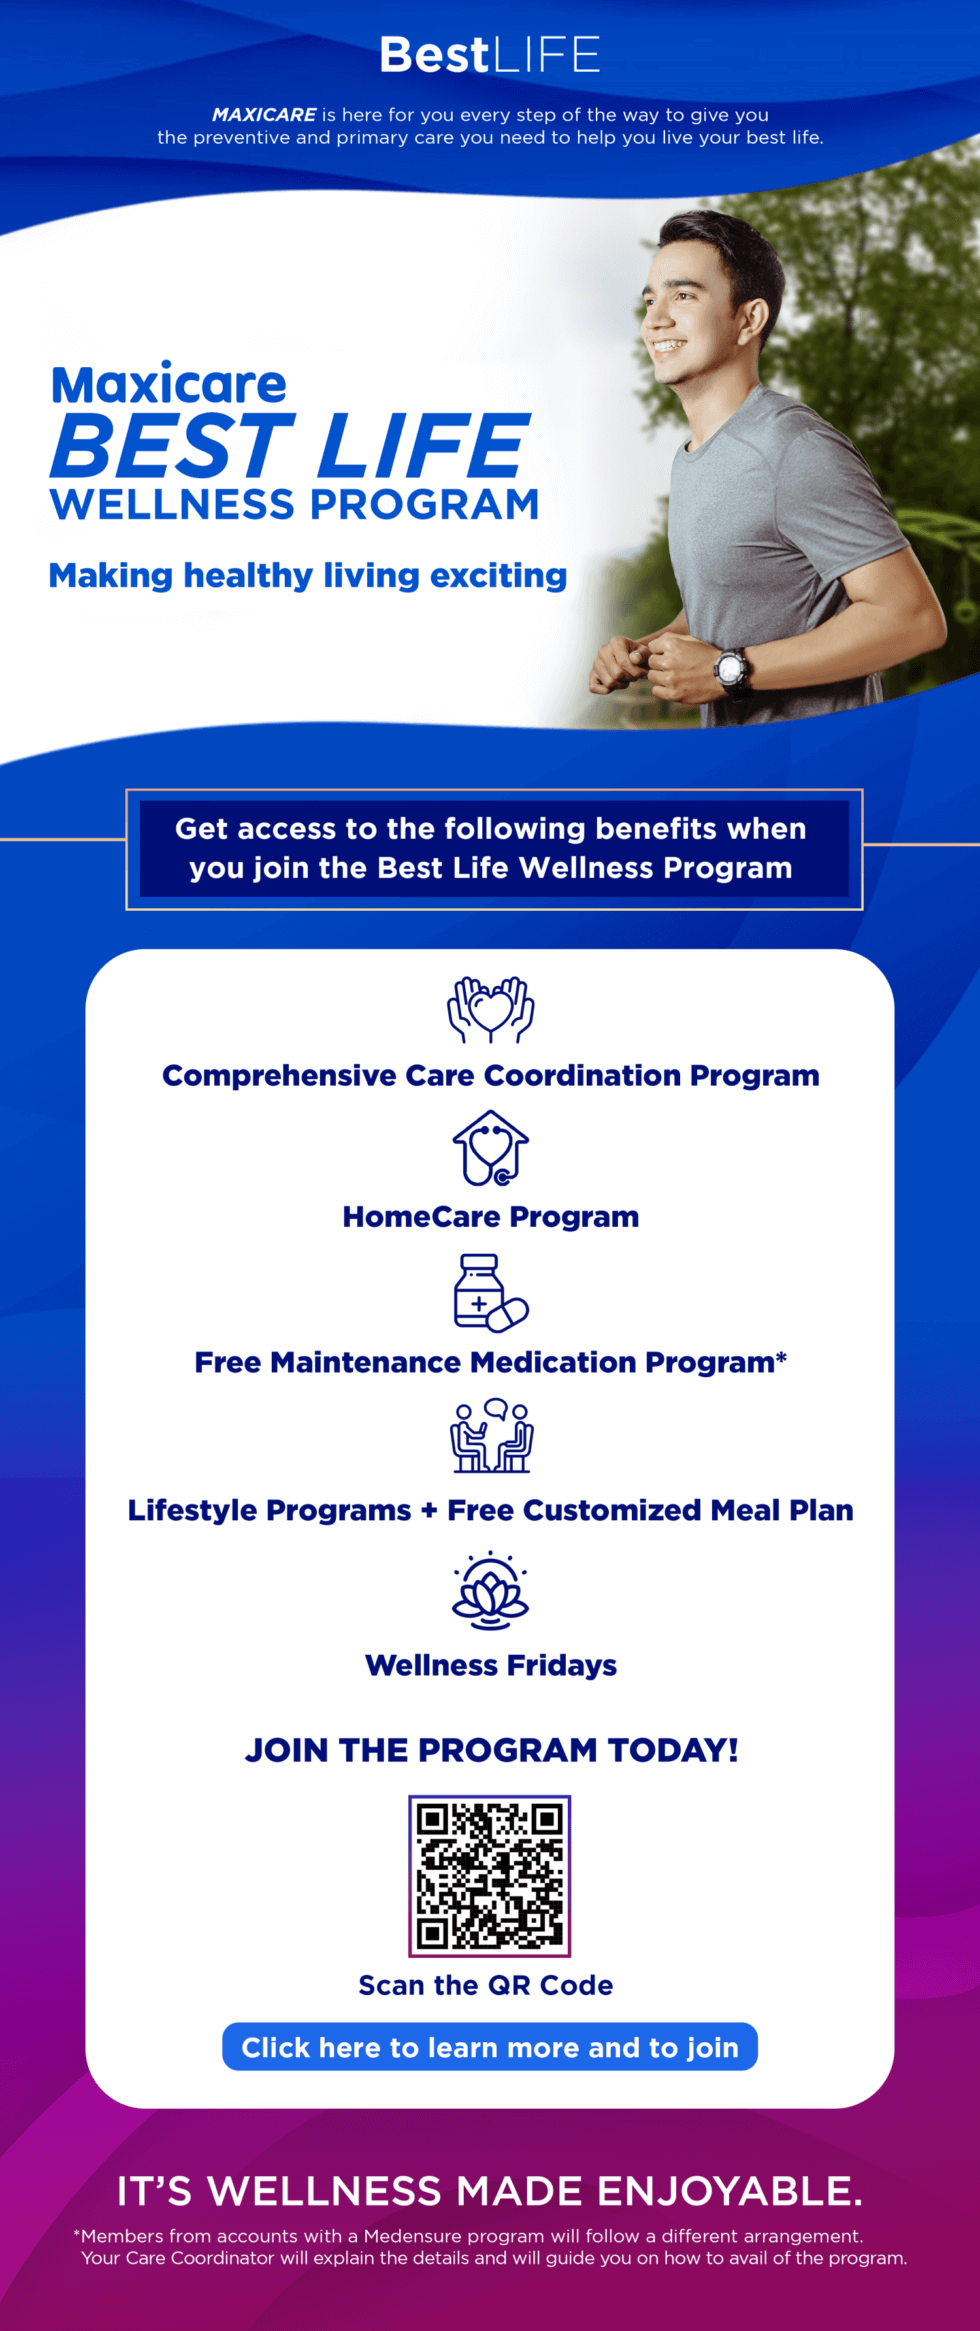 BestLife Wellness Program - Maxicare